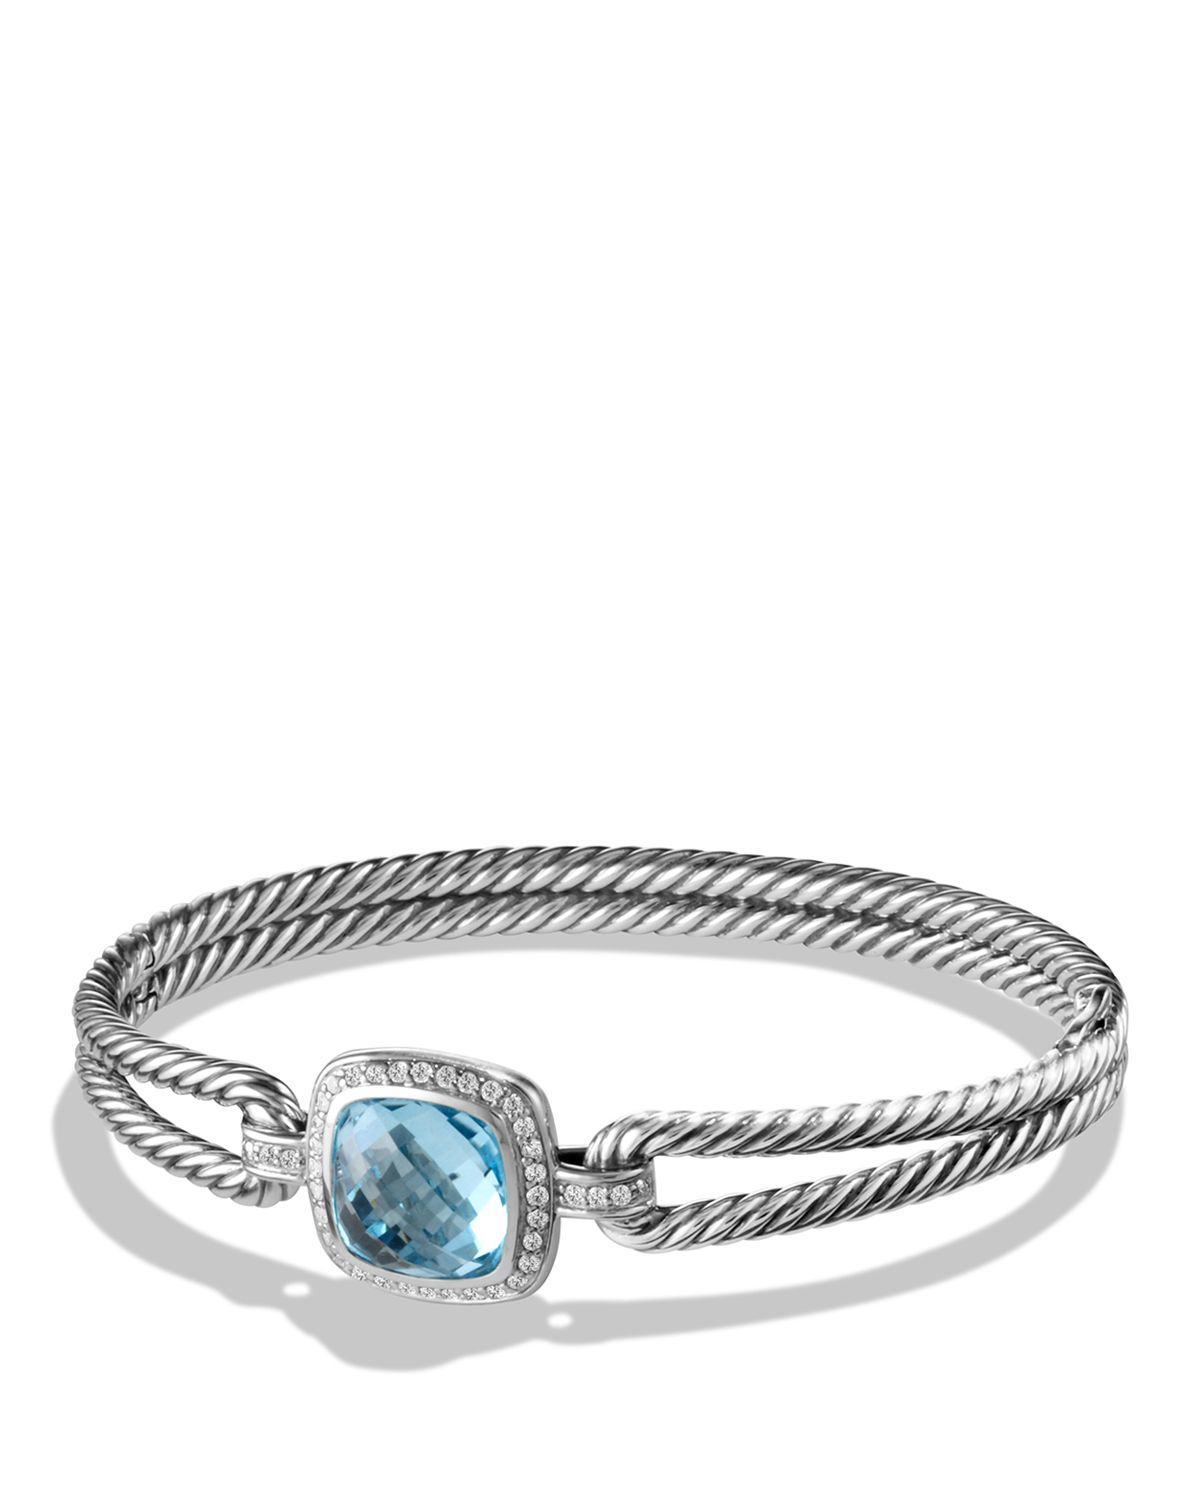 Lyst - David yurman Albion Bracelet With Diamonds And Blue Topaz in Blue